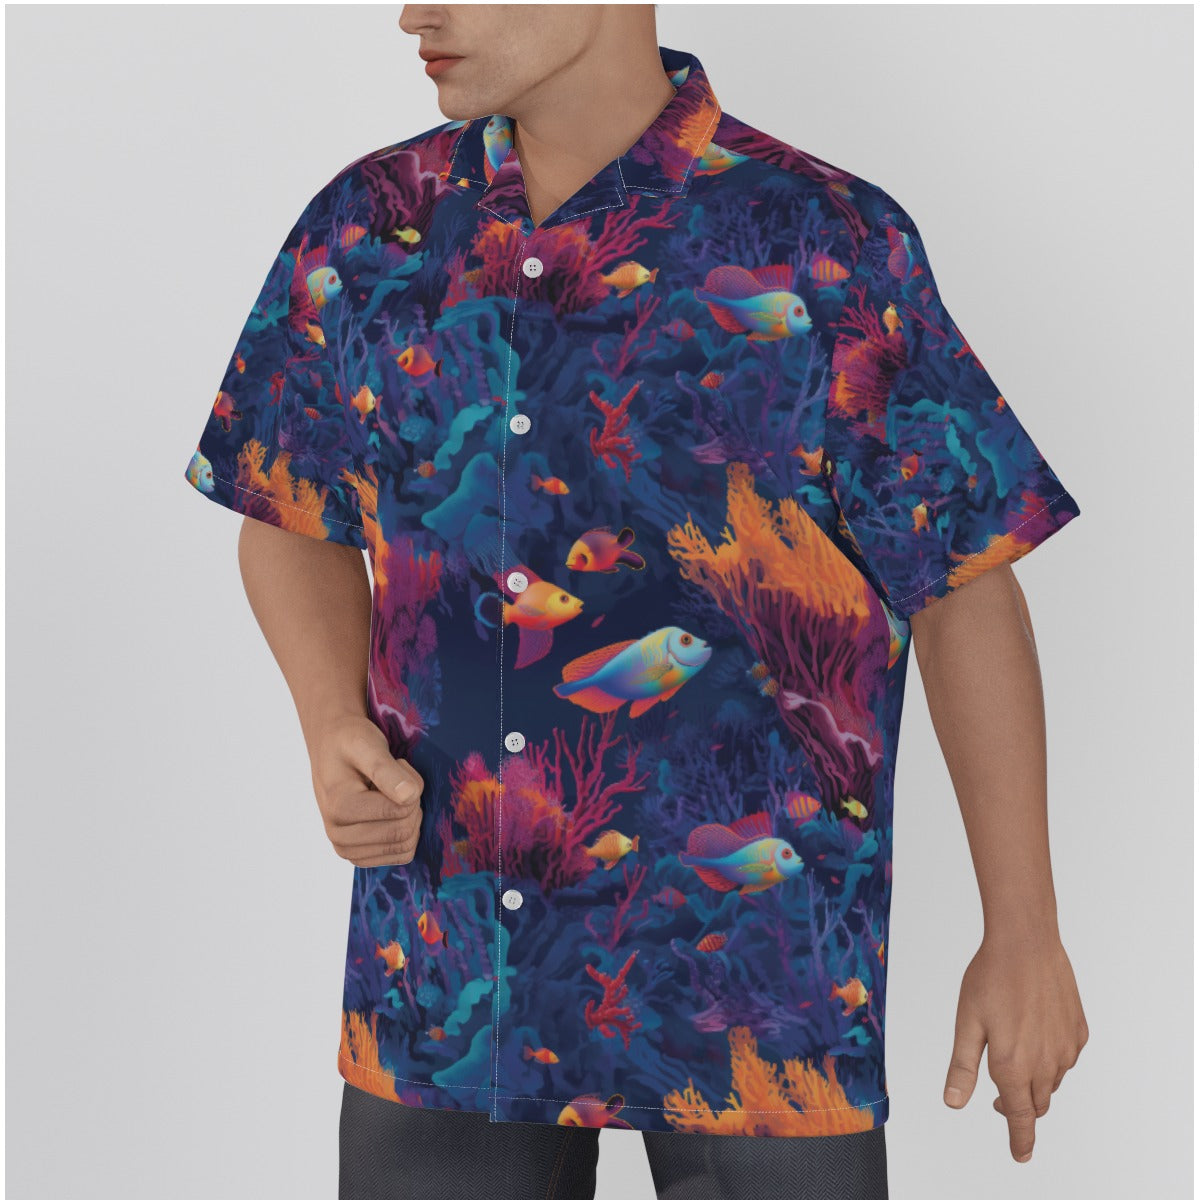 The Blue Tropical Fish Hawaiian Shirt Collection